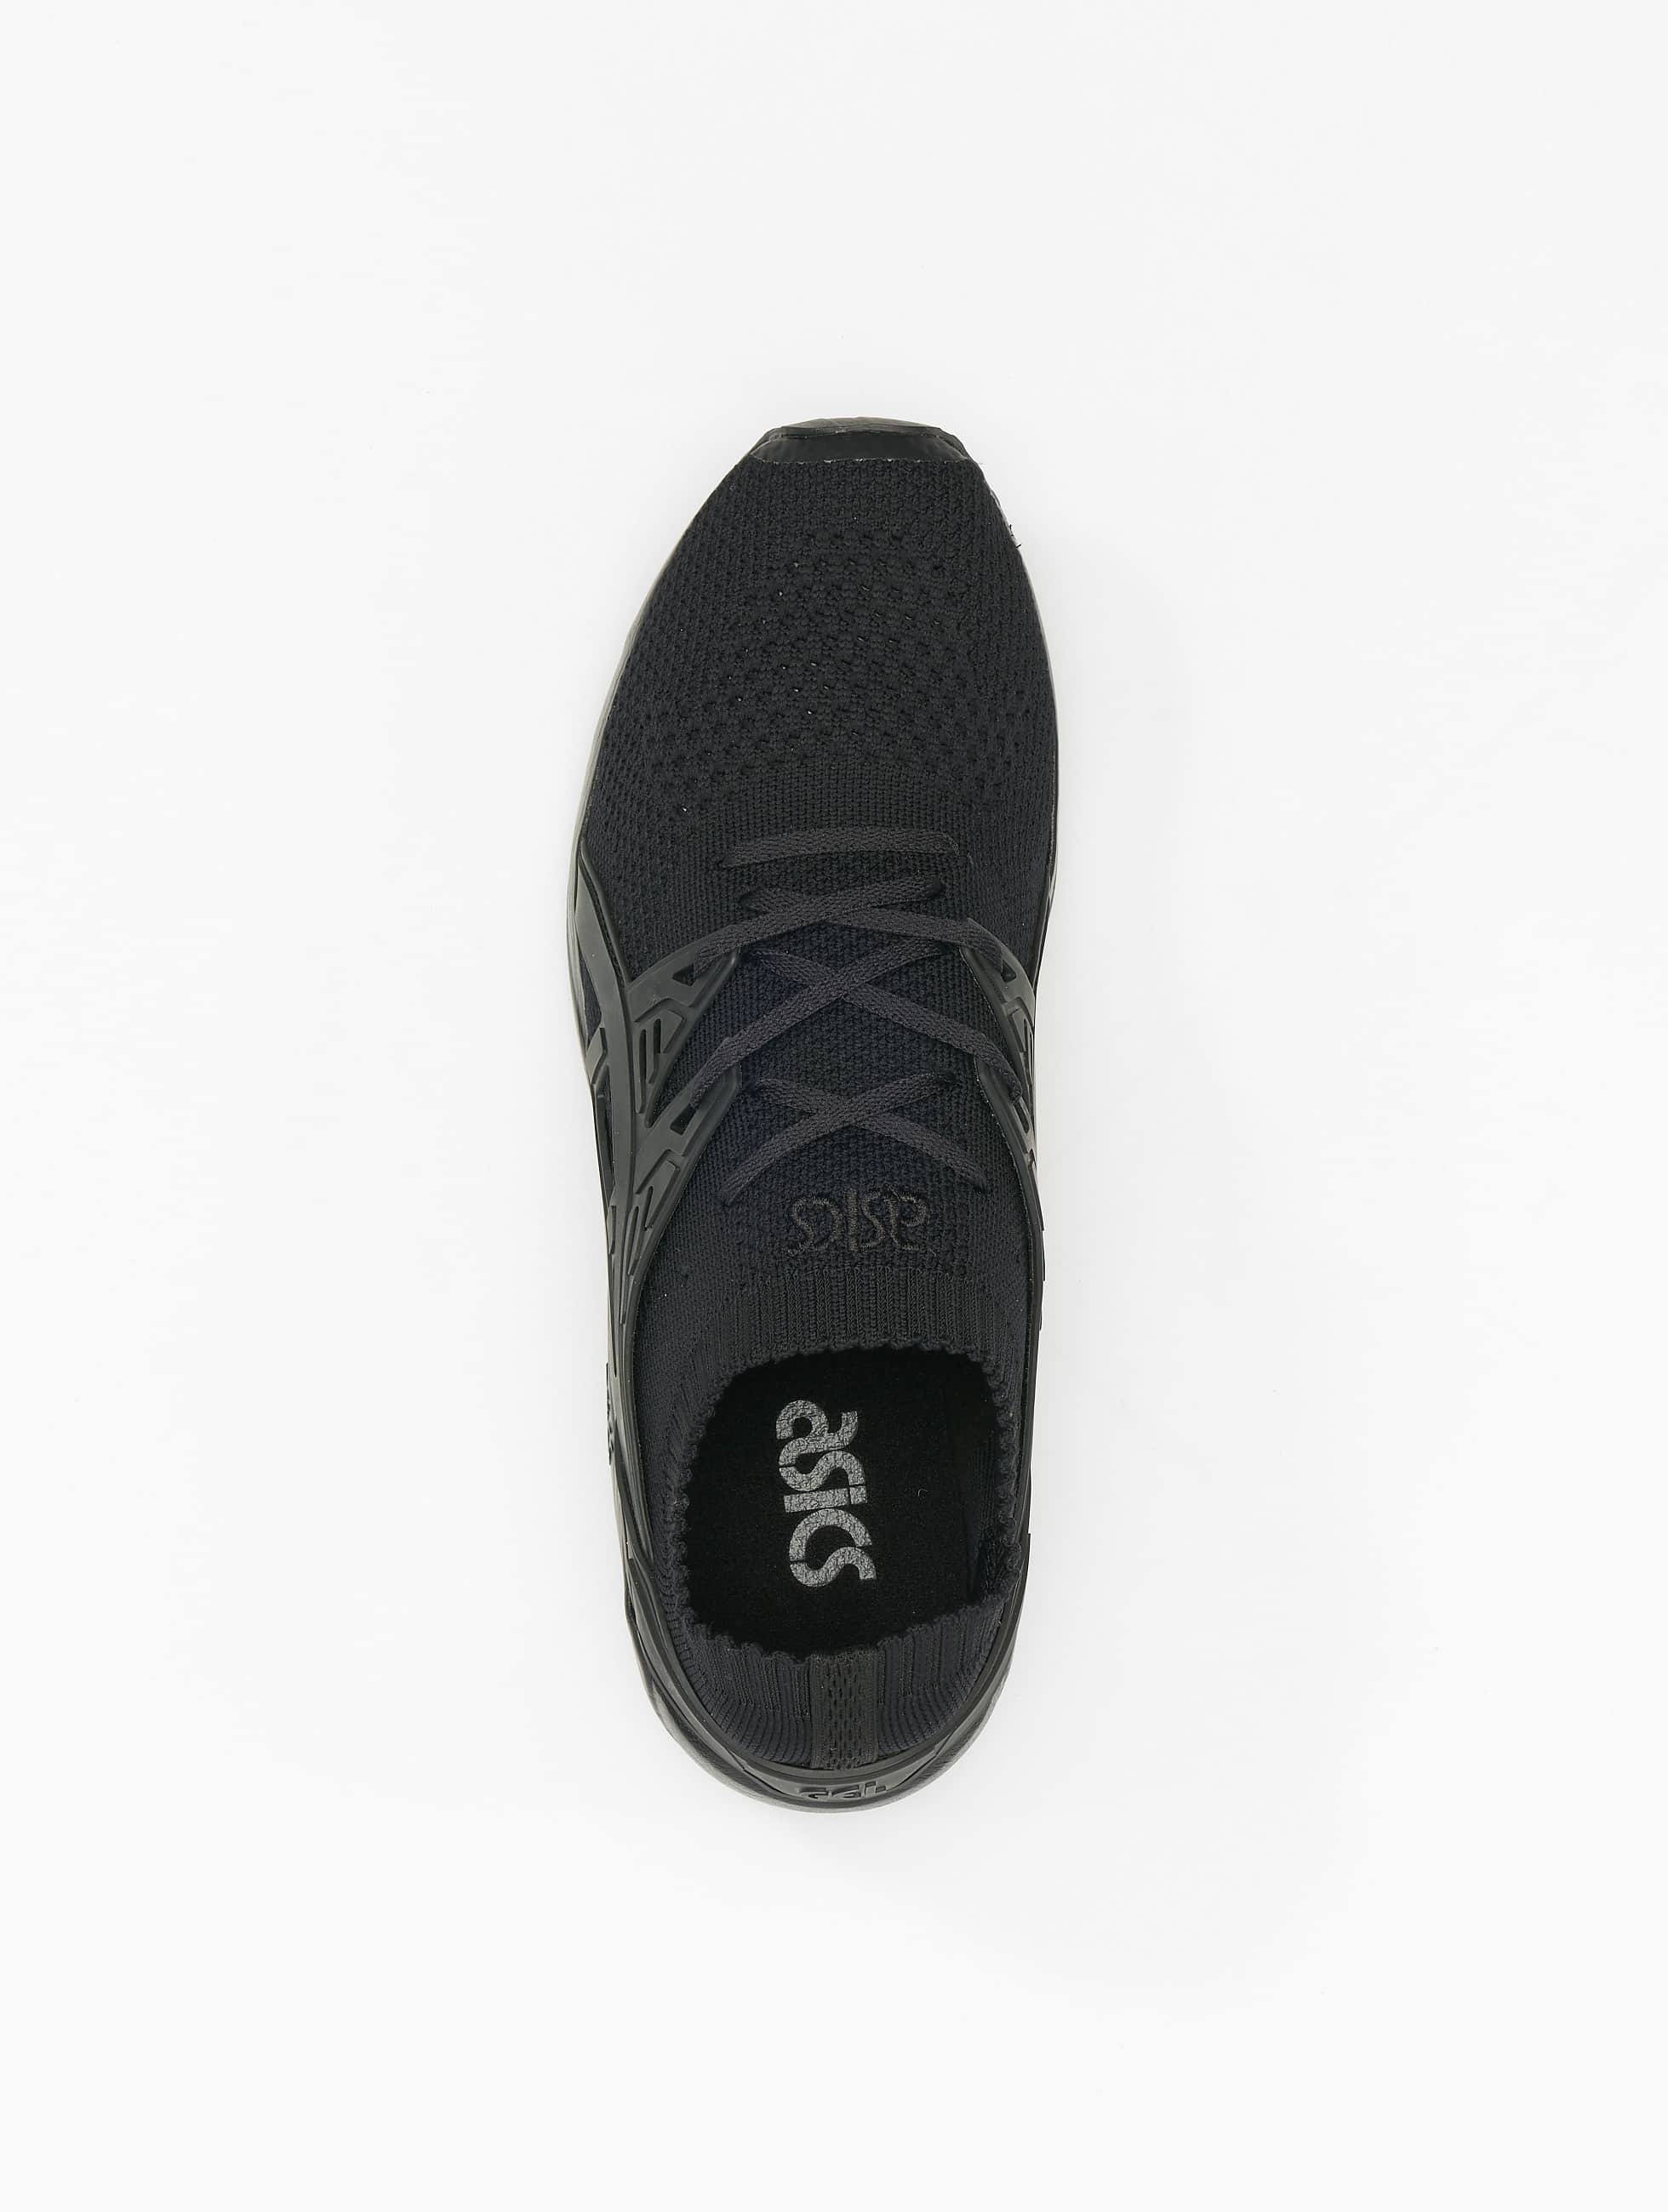 Asics Männer Sneaker Gel-Kayano Trainer Knit in schwarz